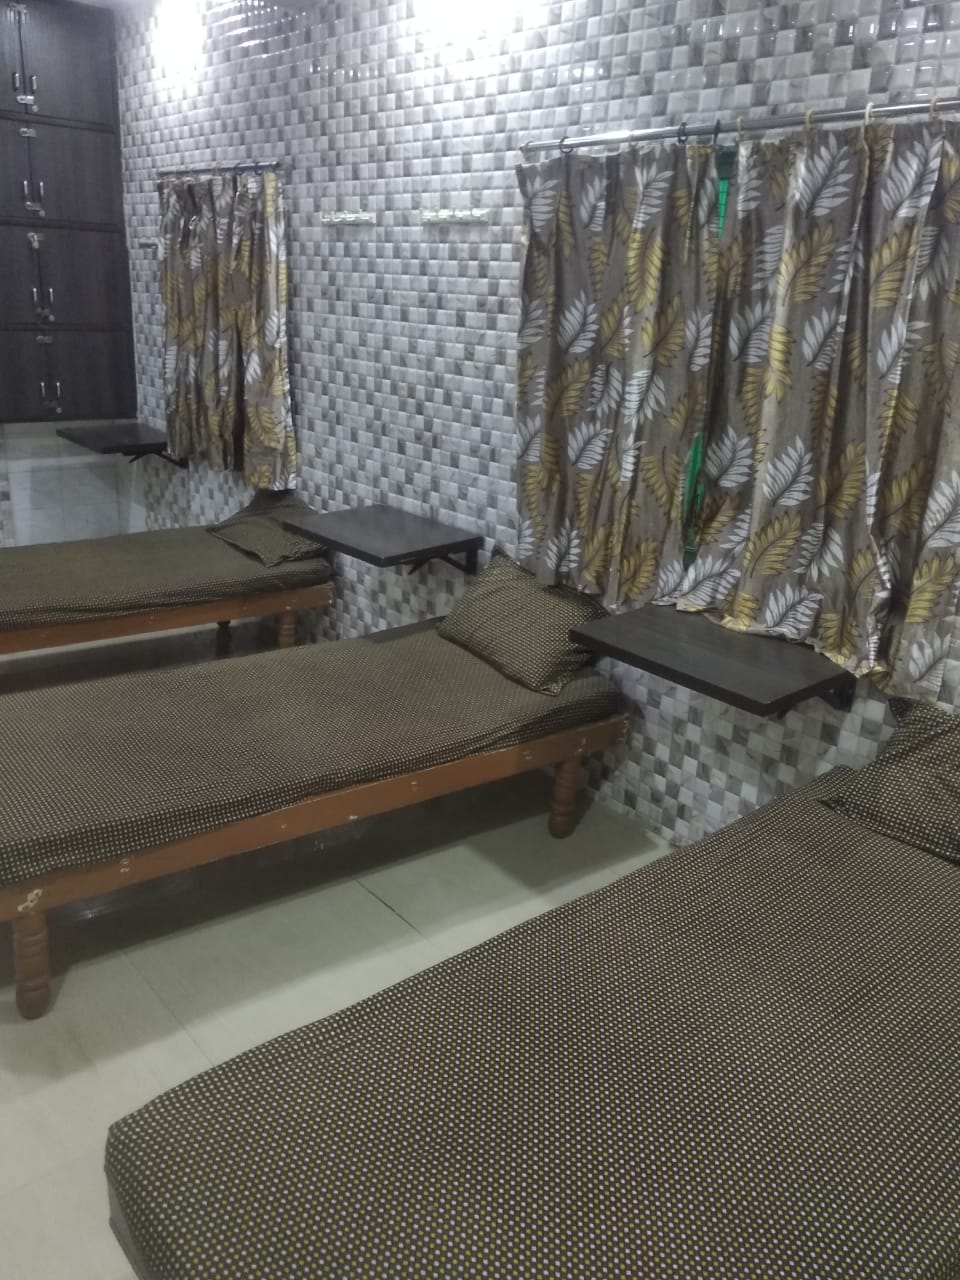 Hostel for Students In Rajkot